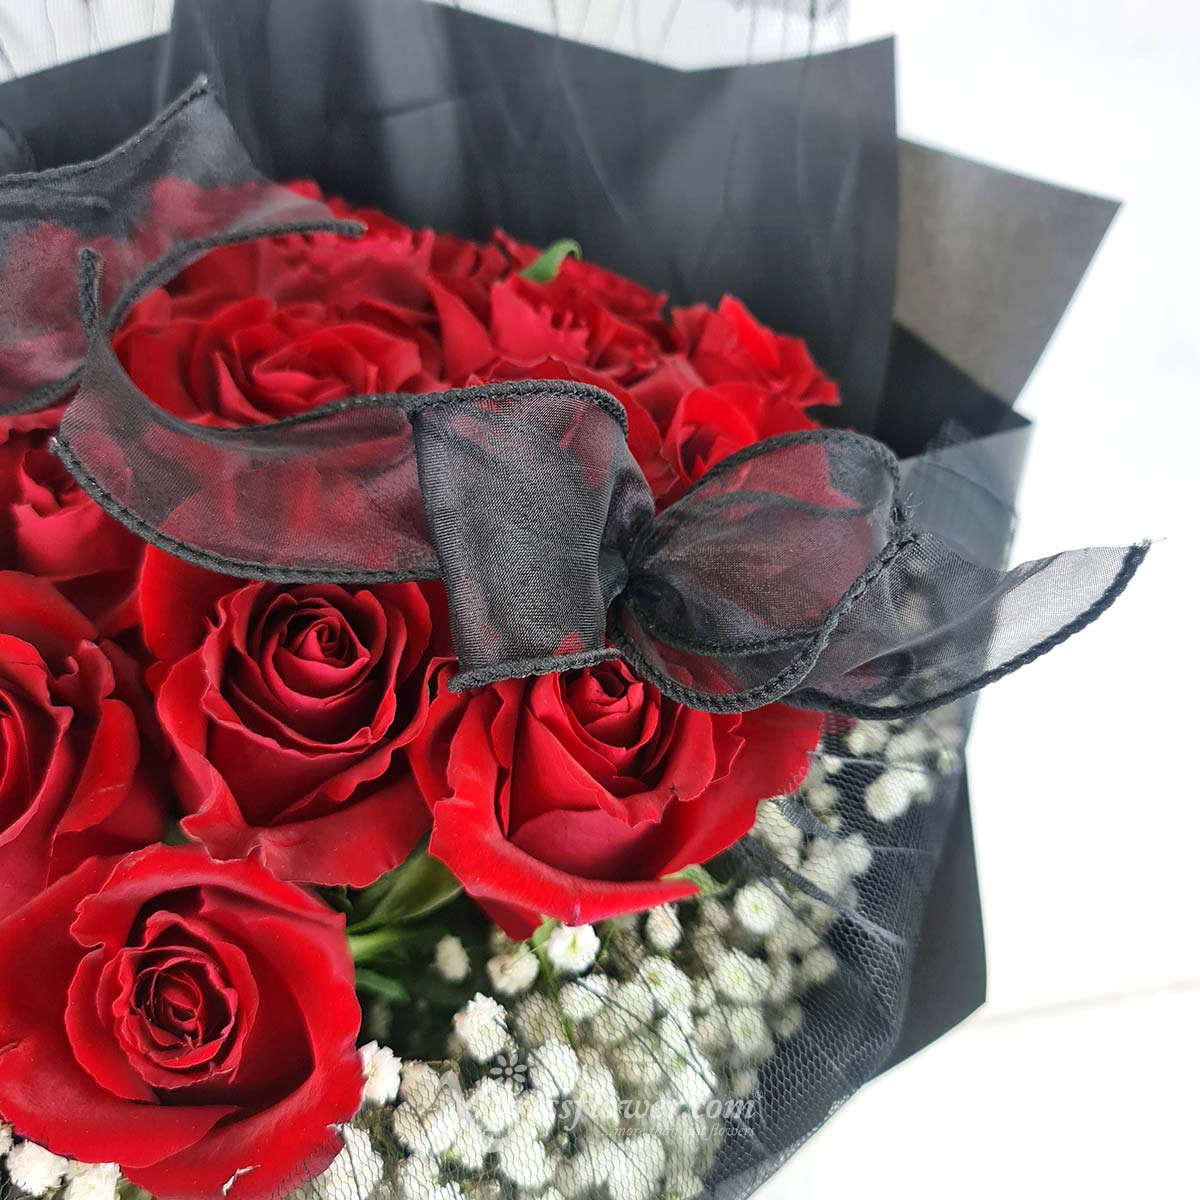 VDBQ2413_Cupids Bouquet 24 Red Roses_1C